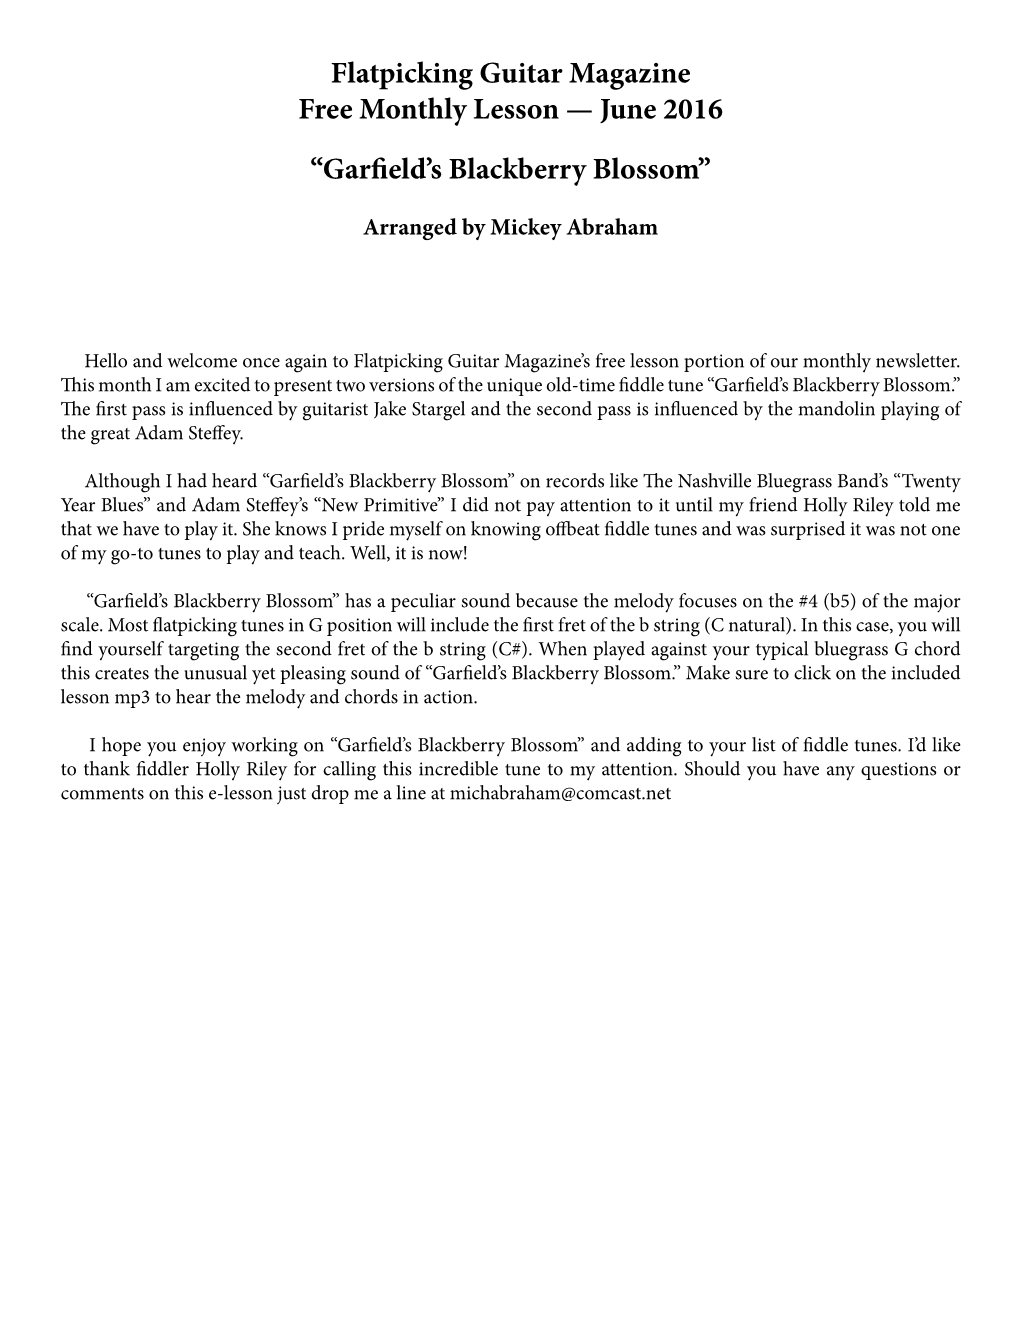 Flatpicking Guitar Magazine Free Monthly Lesson — June 2016 “Garfield’S Blackberry Blossom”